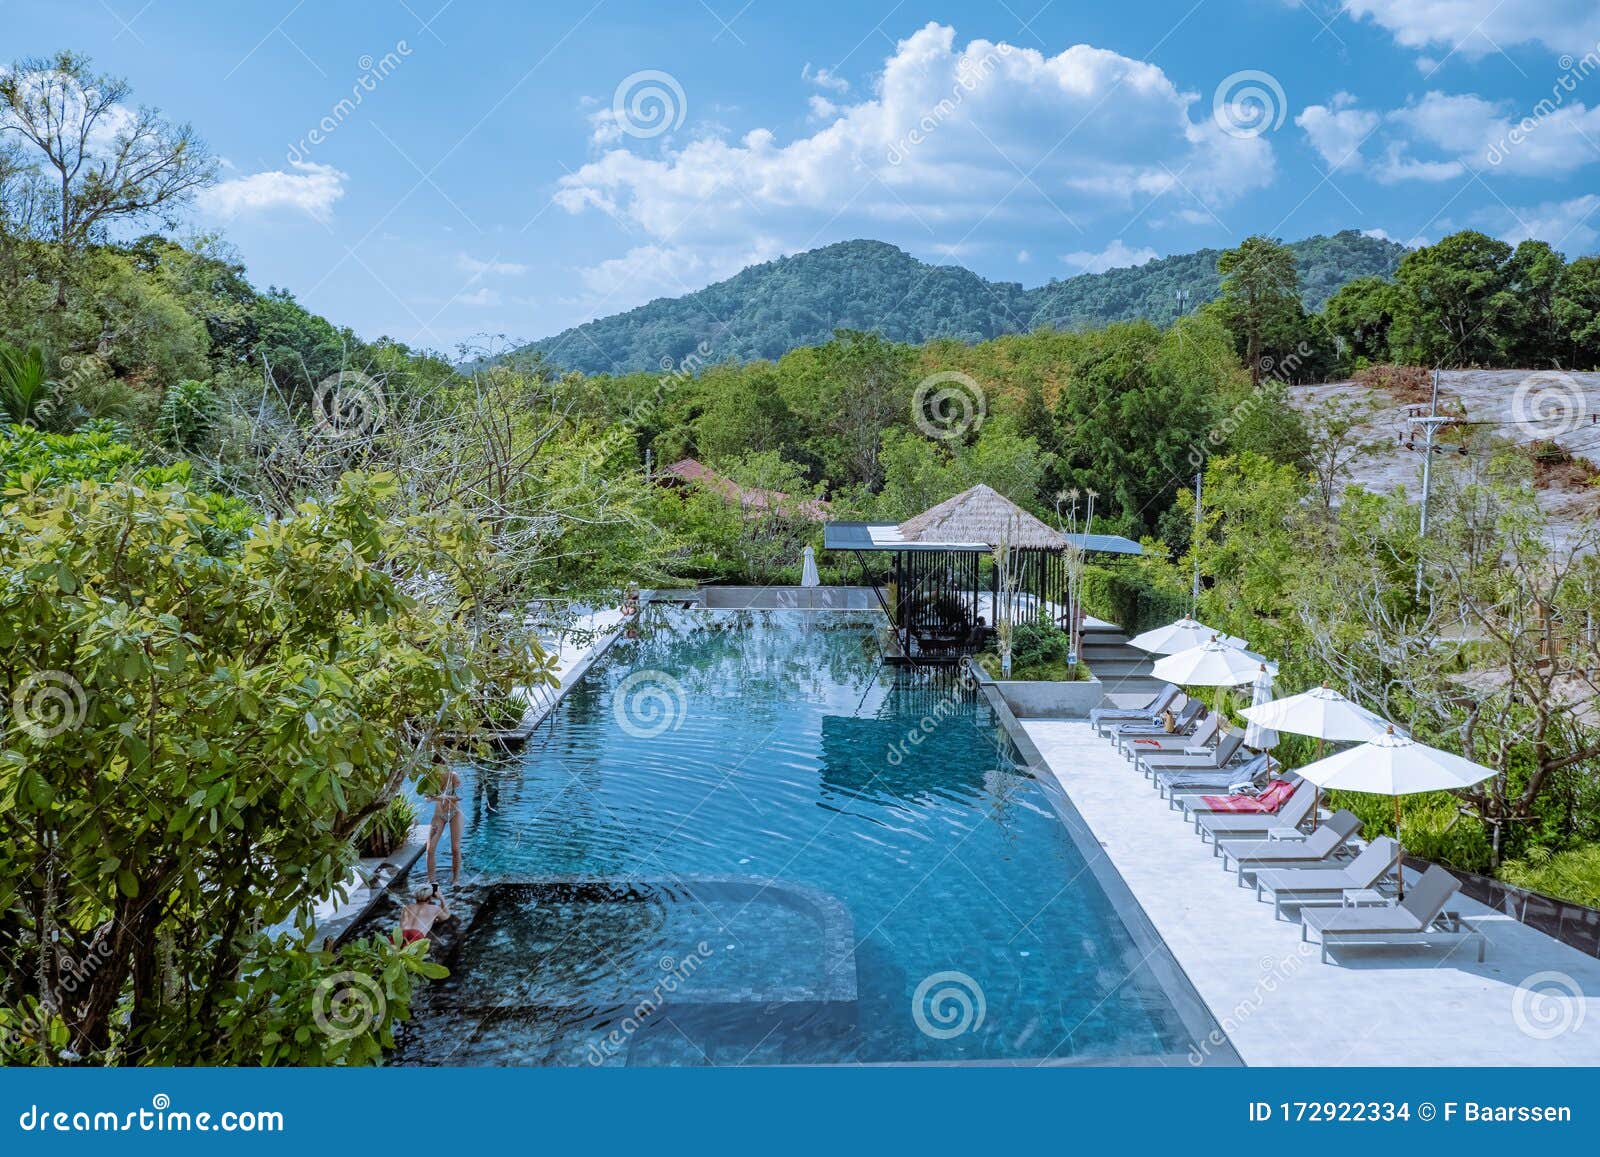 krabi thailand january 2020, an eco friendly luxuri resort in ao nang whit a tropical garden around anana krabi